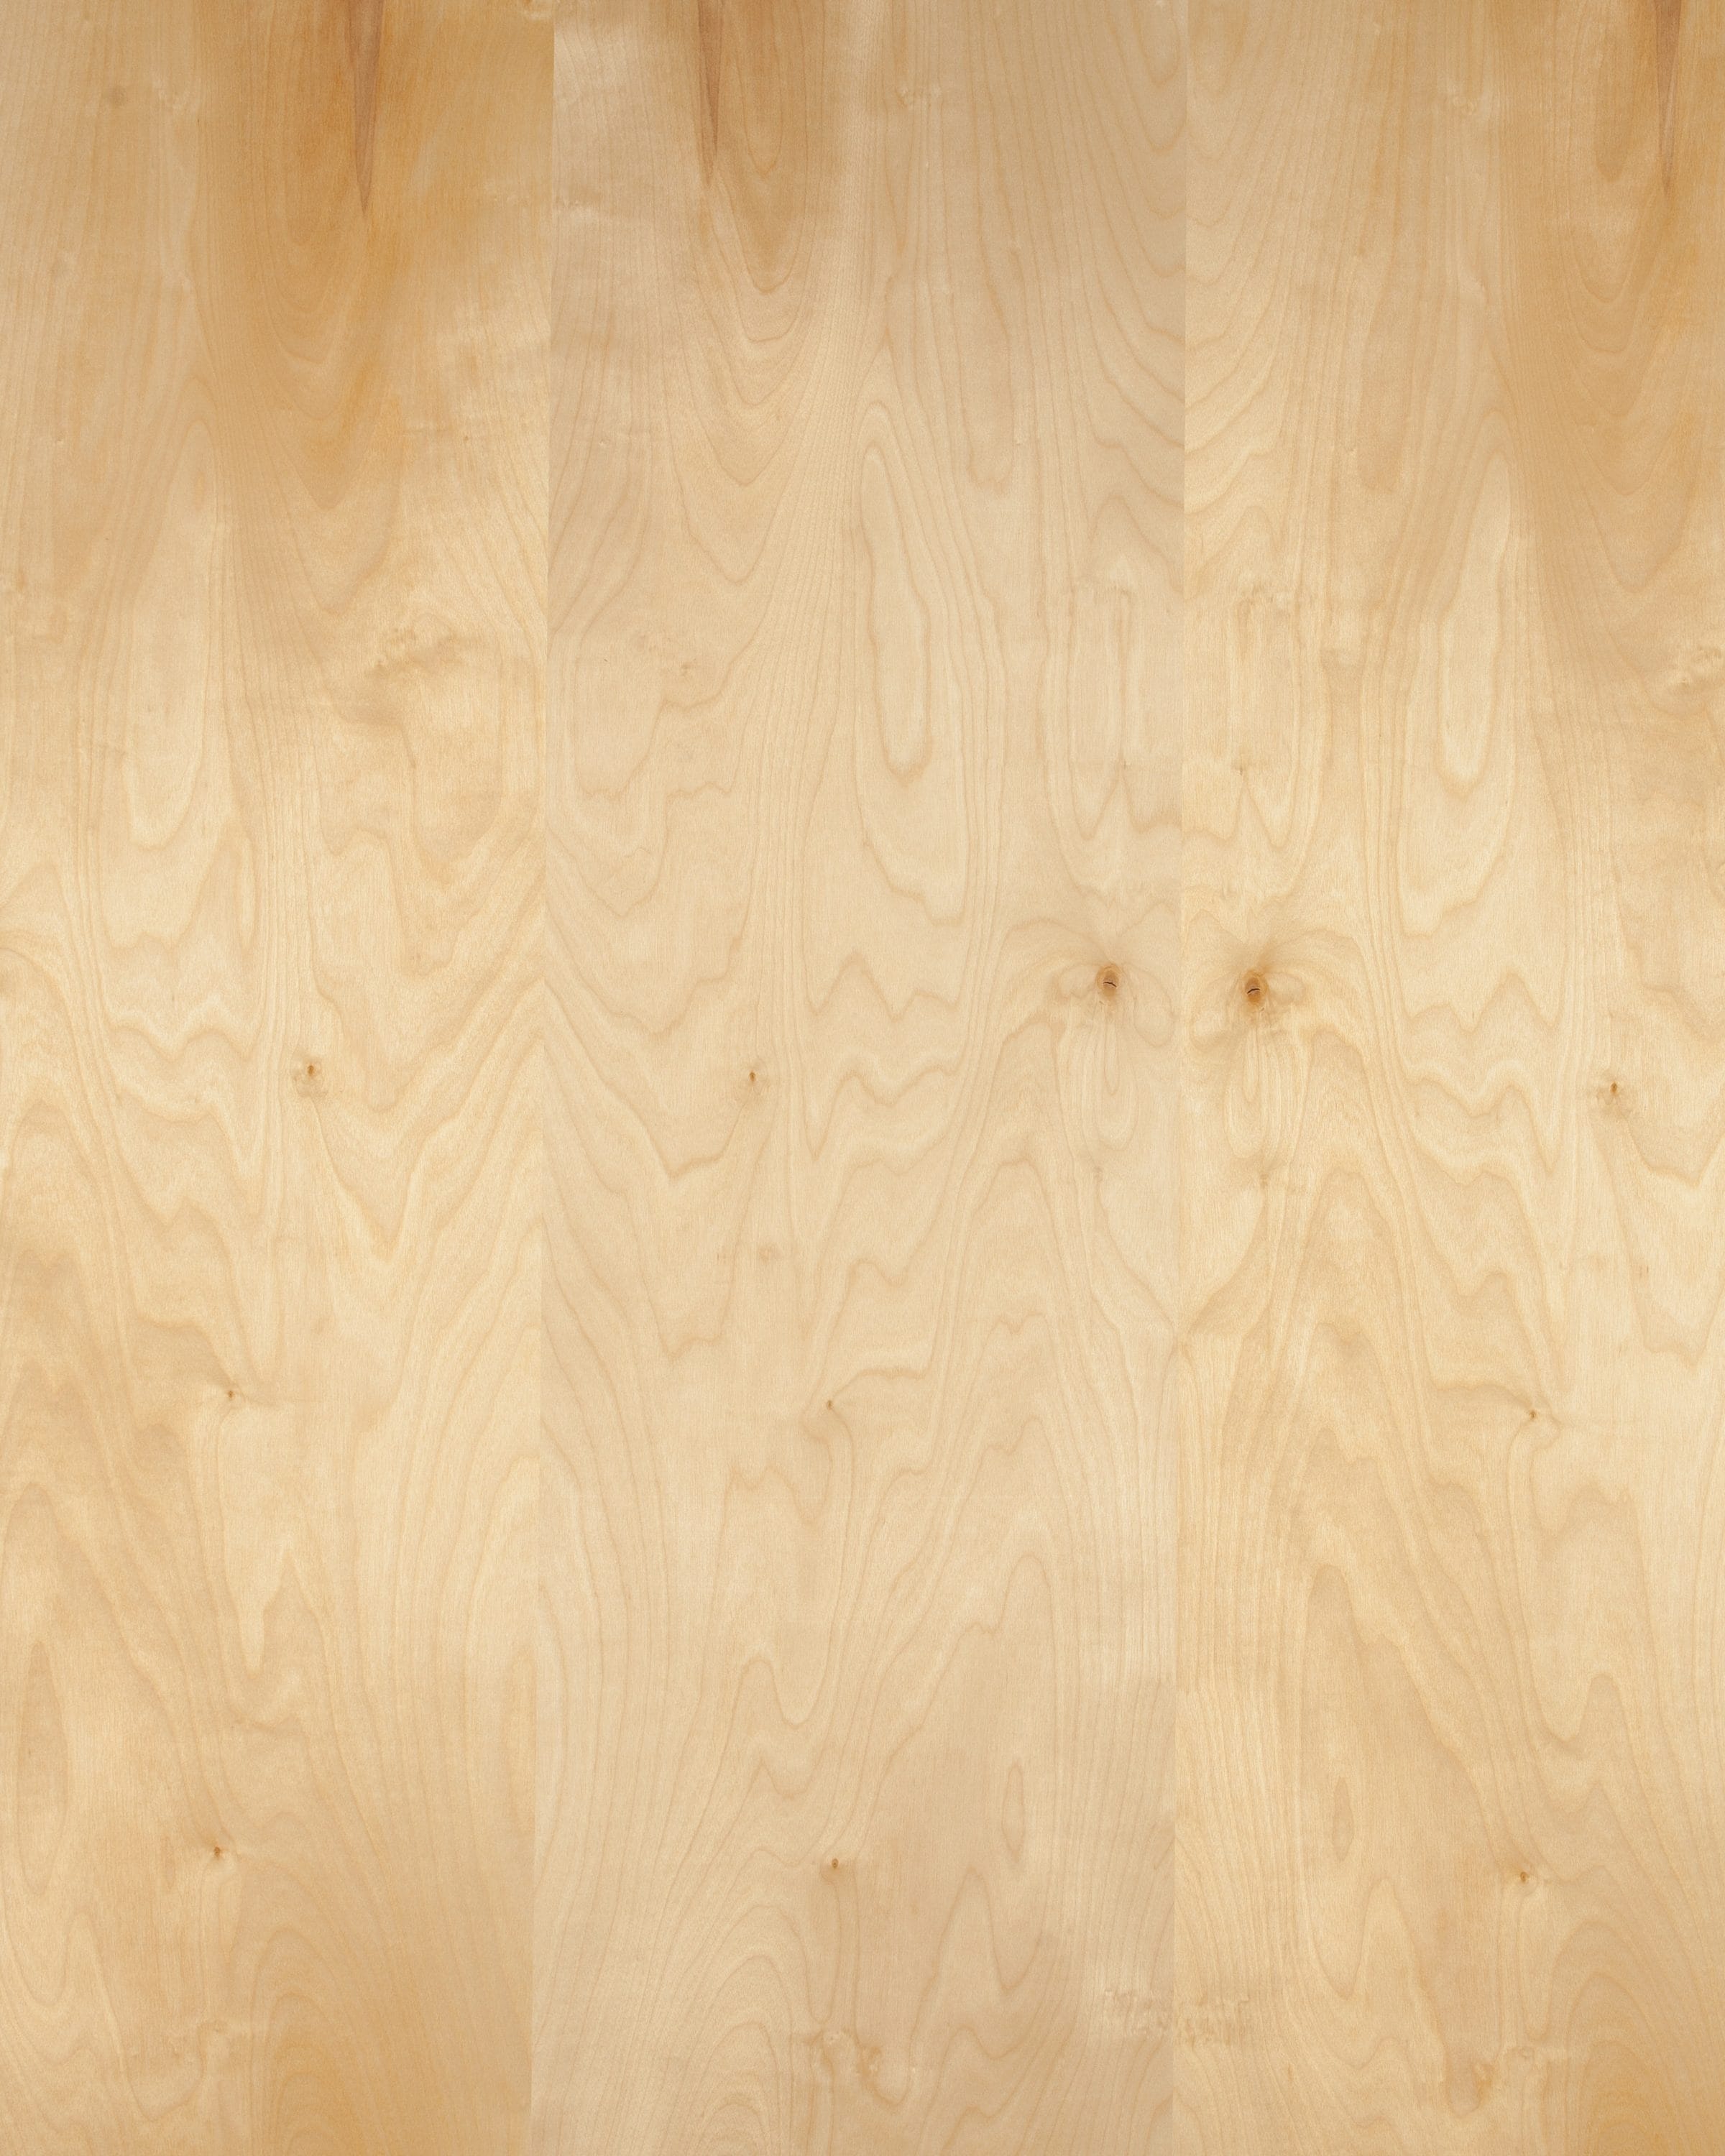 1/8 - B/BB - Premium Baltic Birch Plywood 11.75 x 19 – H & H